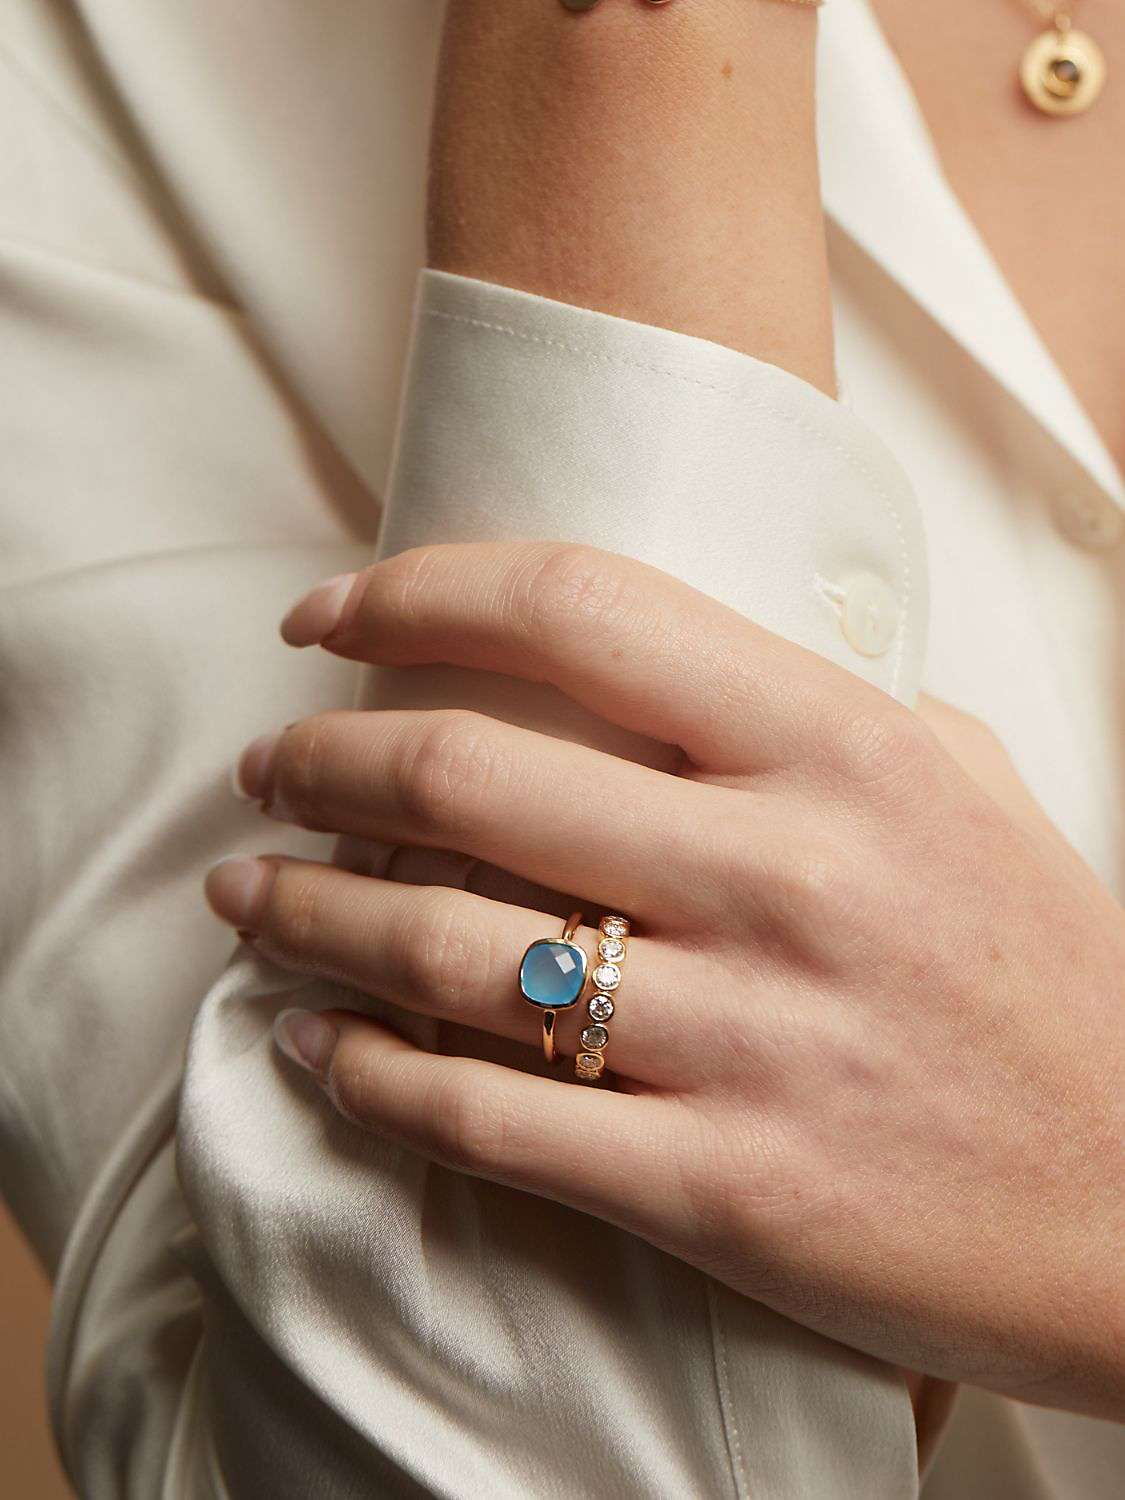 Buy Auree Mondello Blue Chalcedony Ring, Gold Online at johnlewis.com